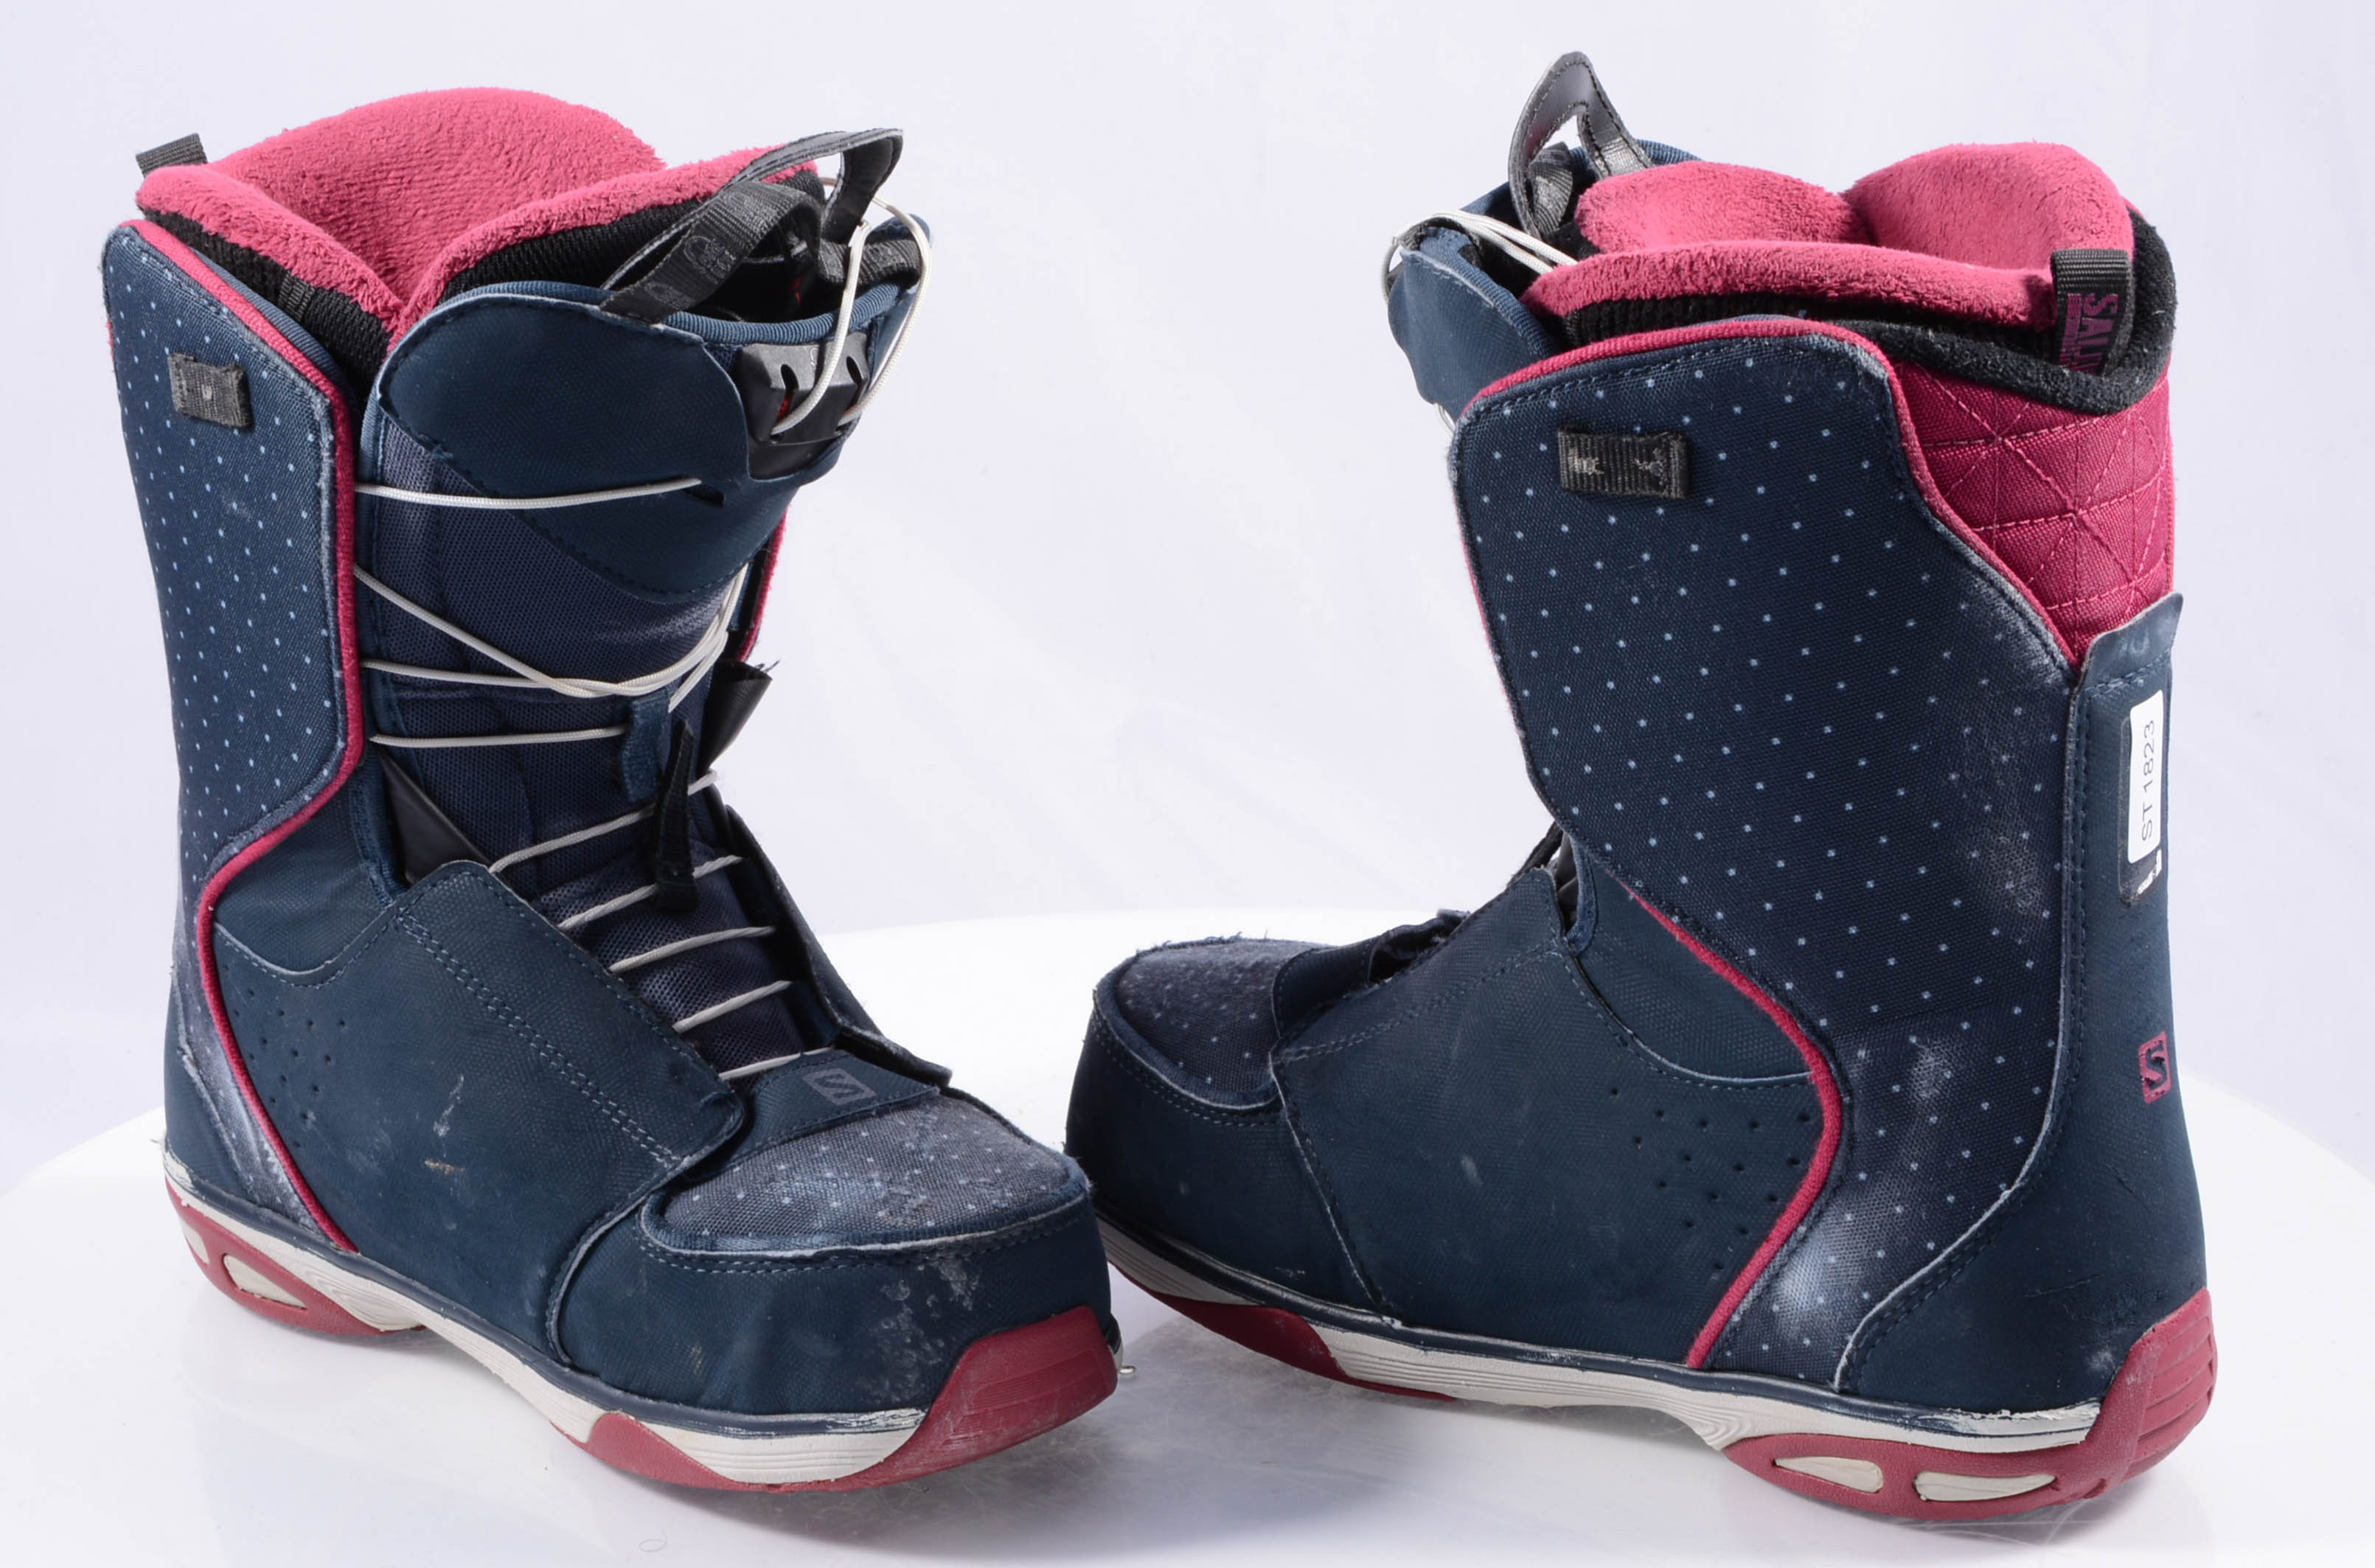 snowboard boots SALOMON POLKA DOT, lock/unlock, contagrip, dark blue/ pink - Mardosport.com